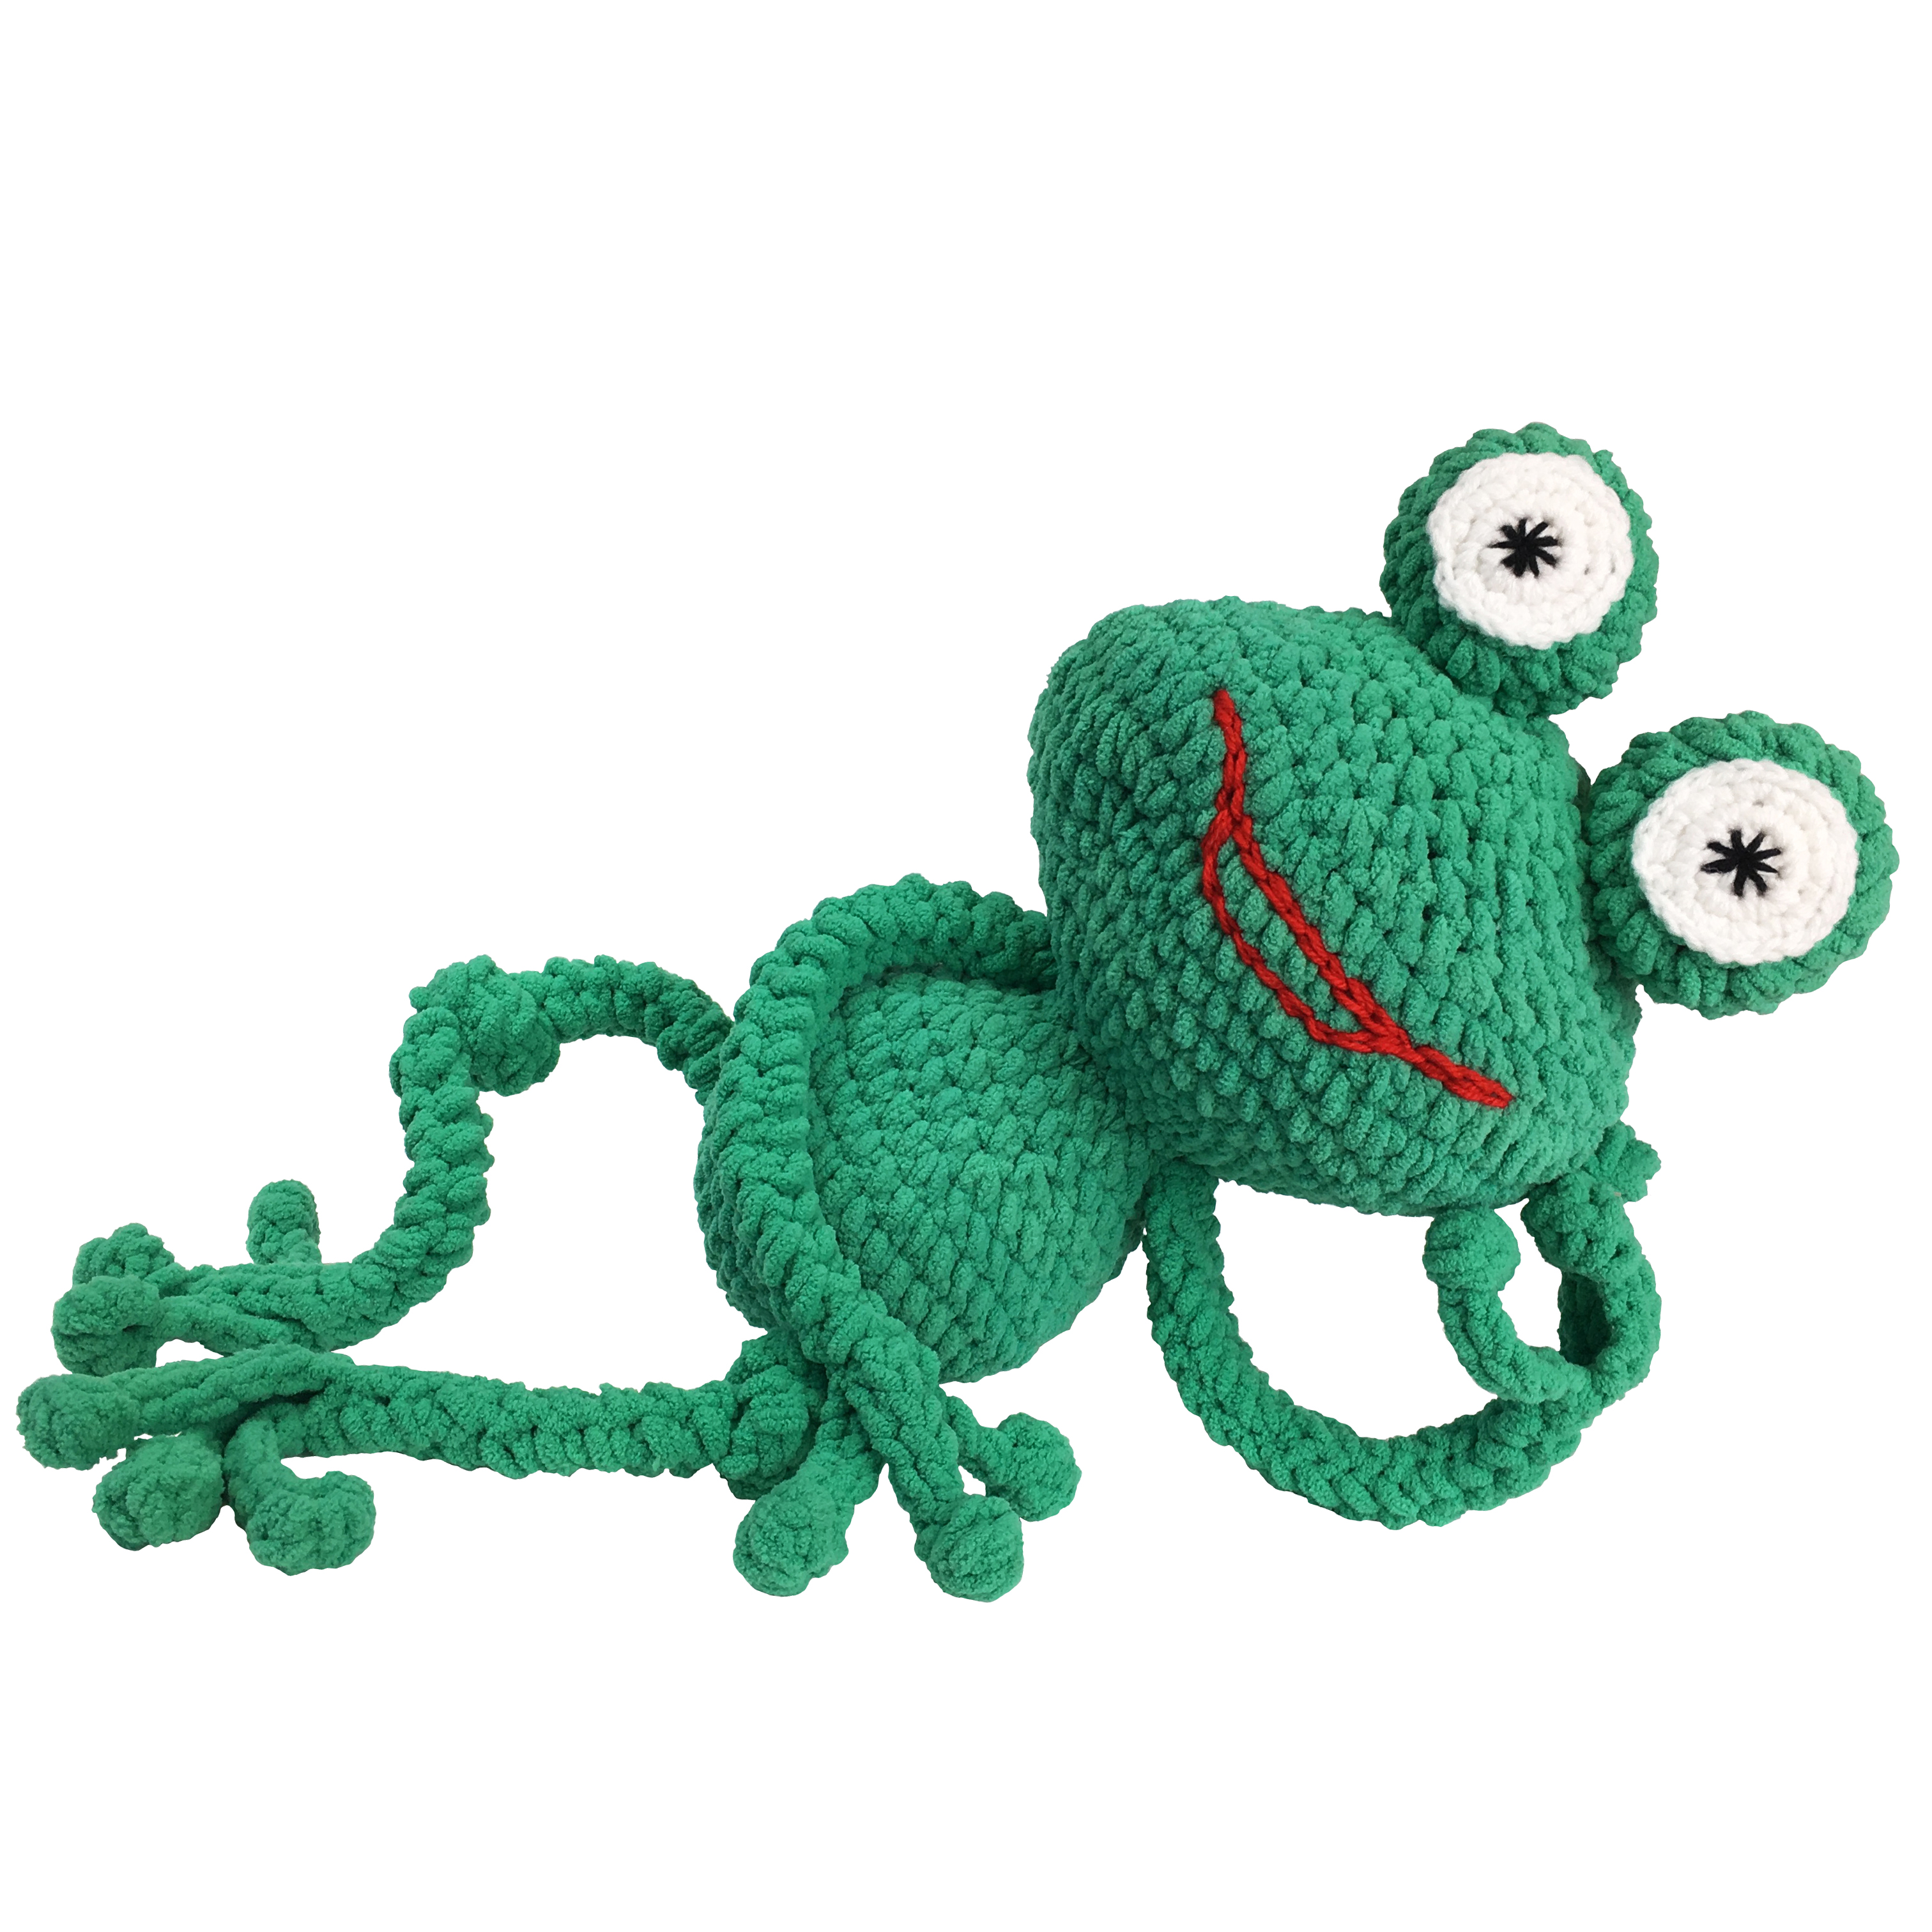 Knitty Critters - Frog - Go Go Eddie